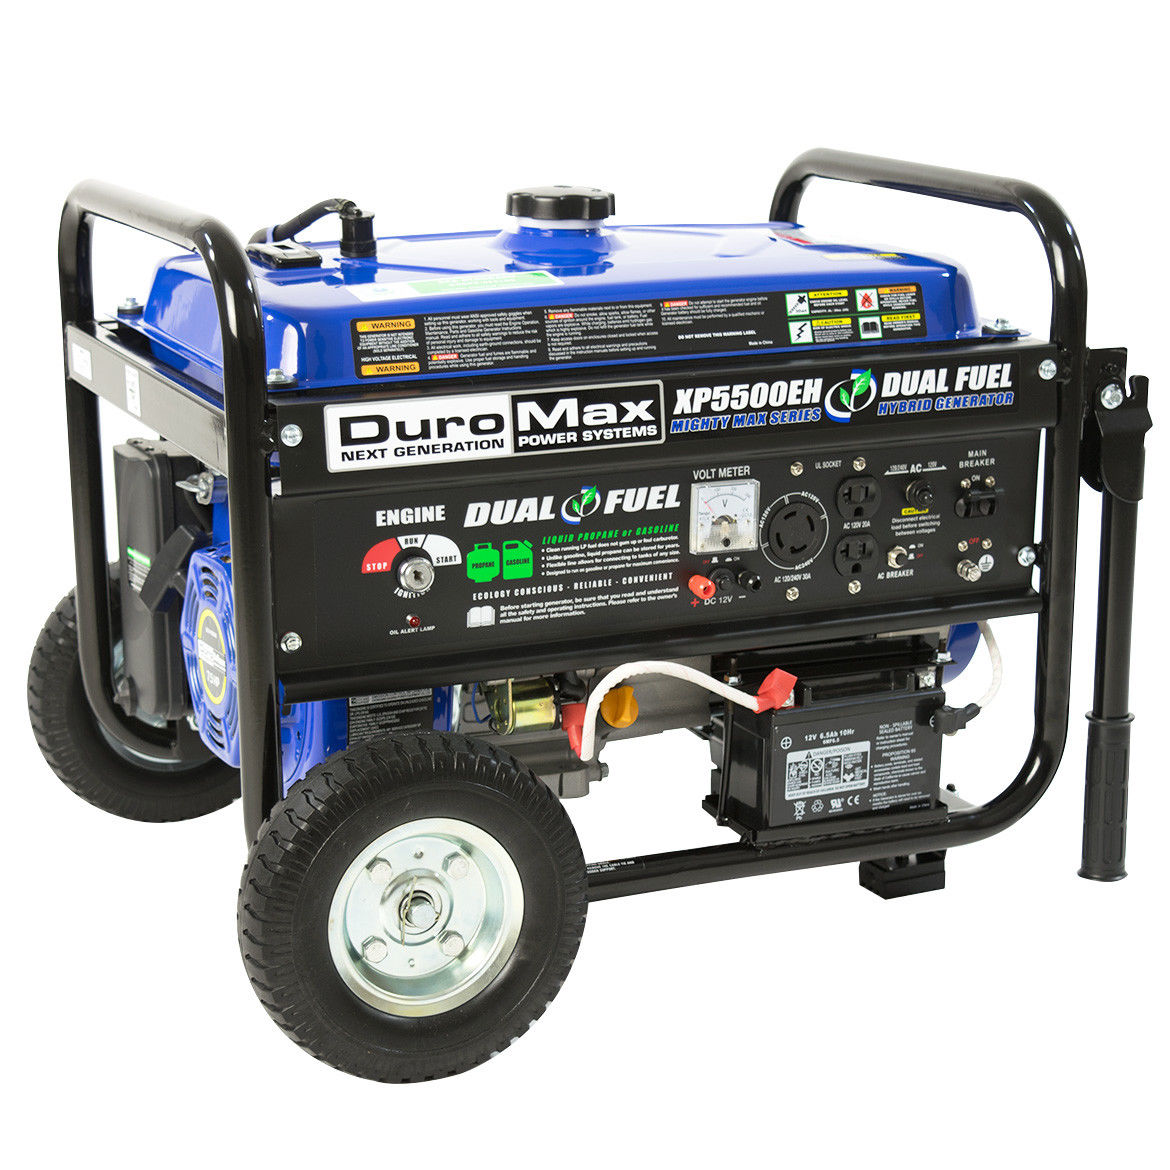 Duromax 5,500-watt 7.5 HP portable electric start gas propane generator for $400